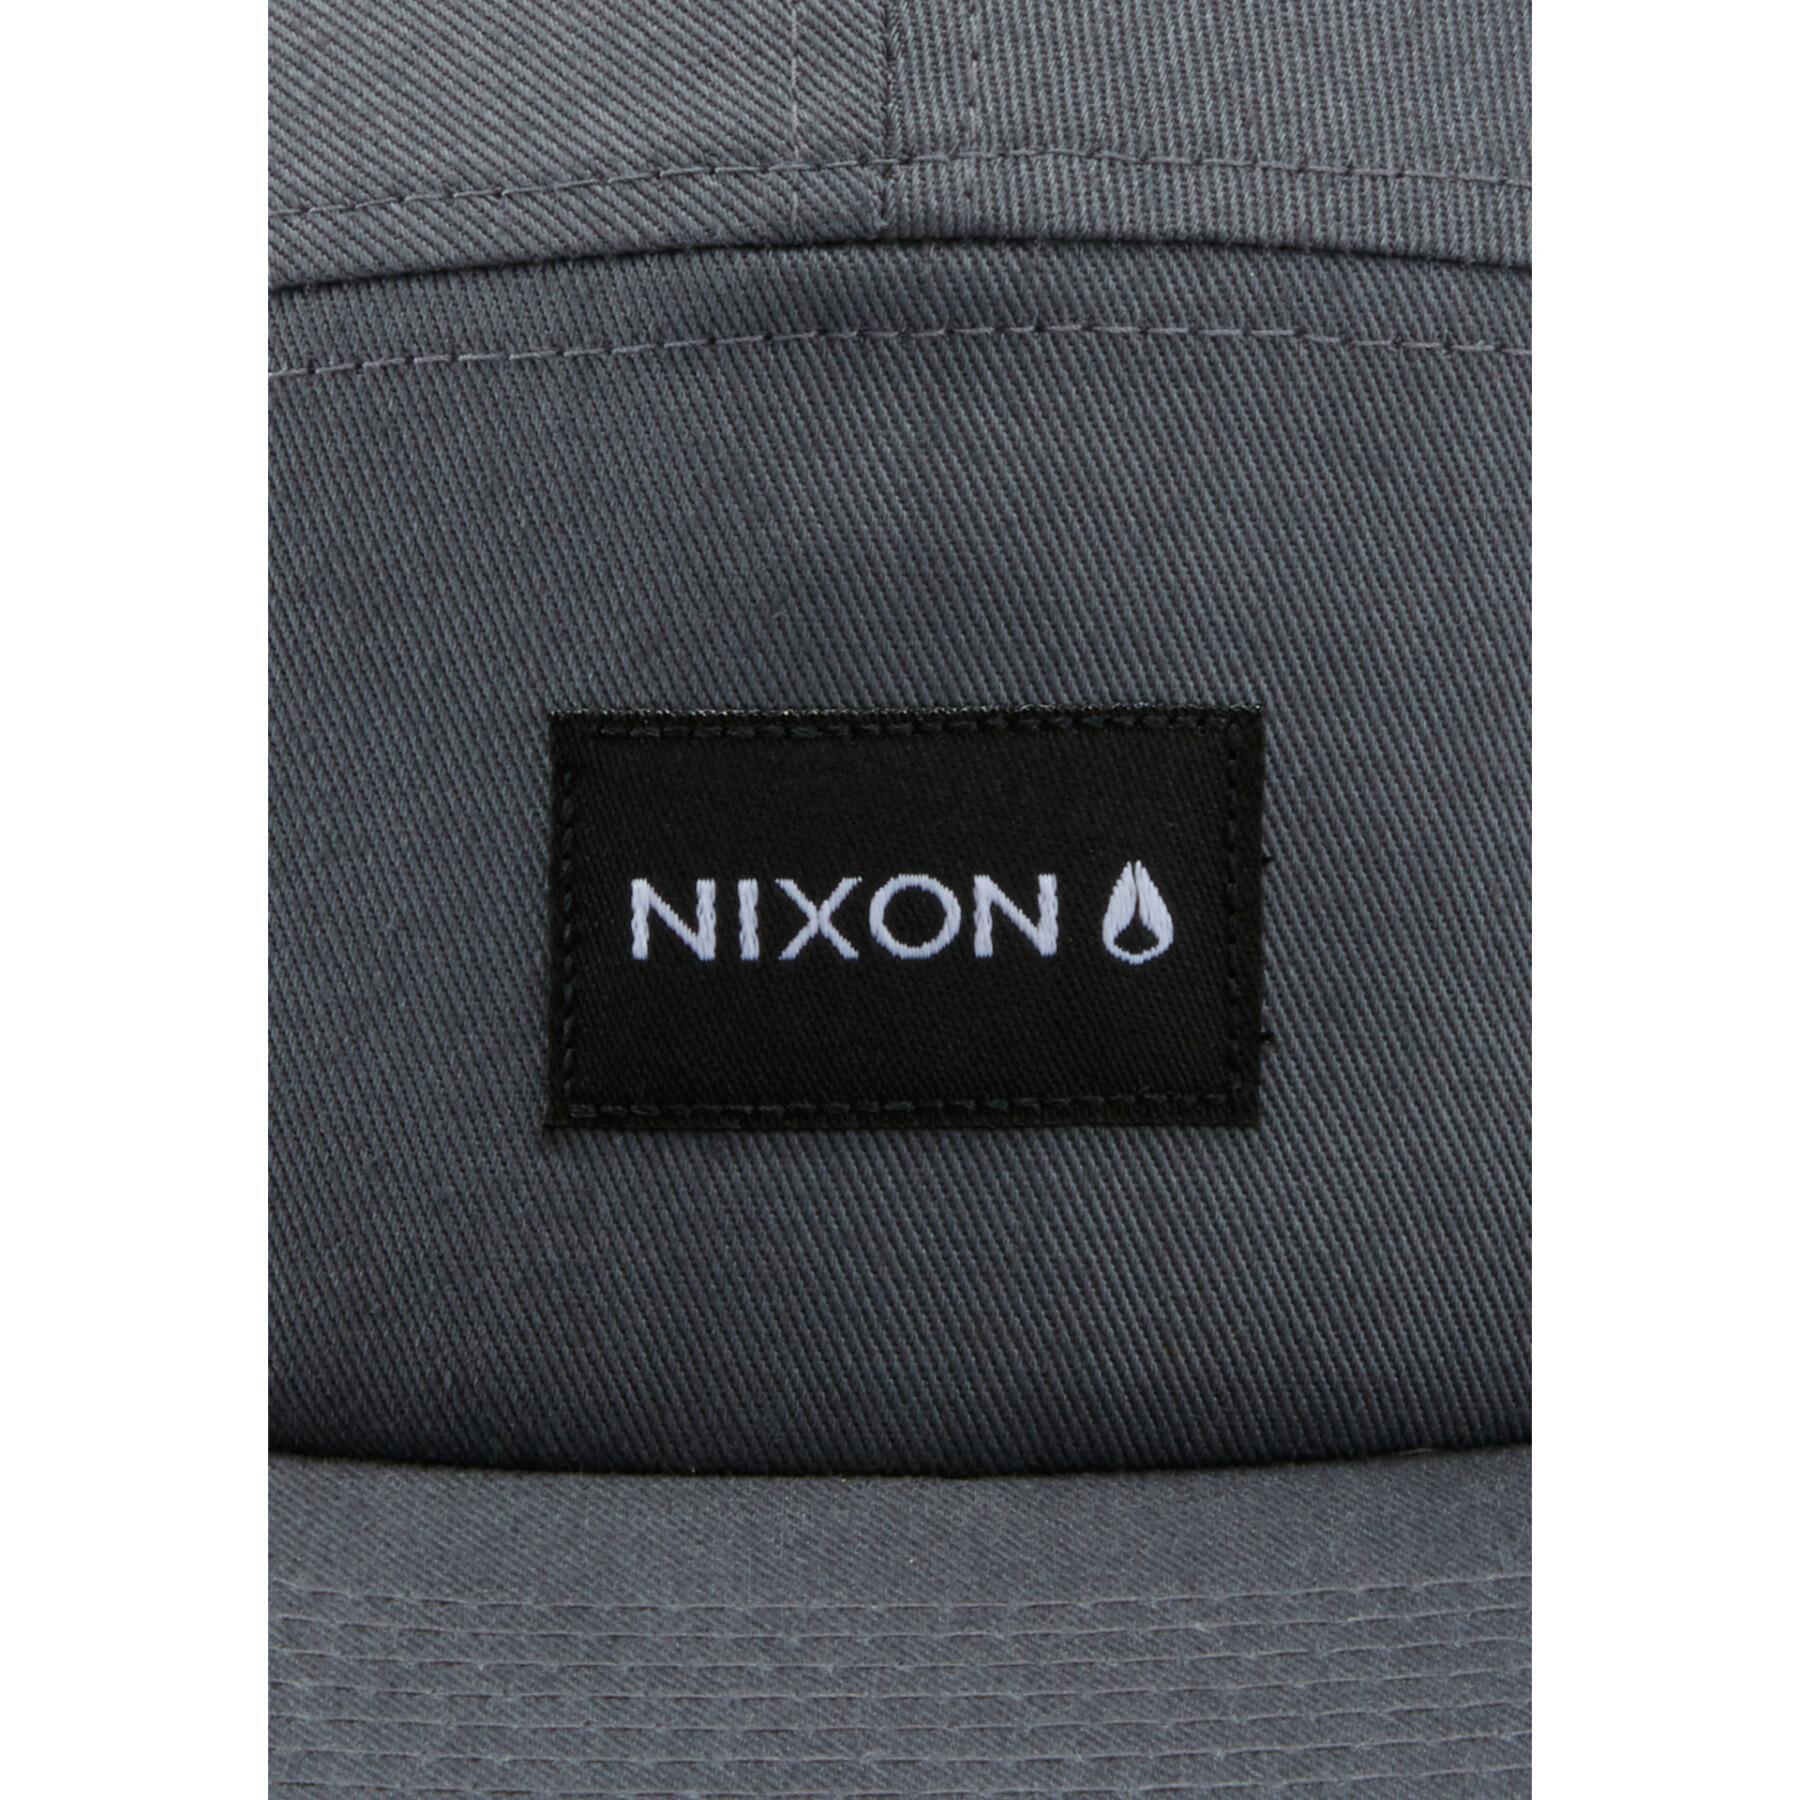 Kappe mit Rückengurt Nixon Mikey